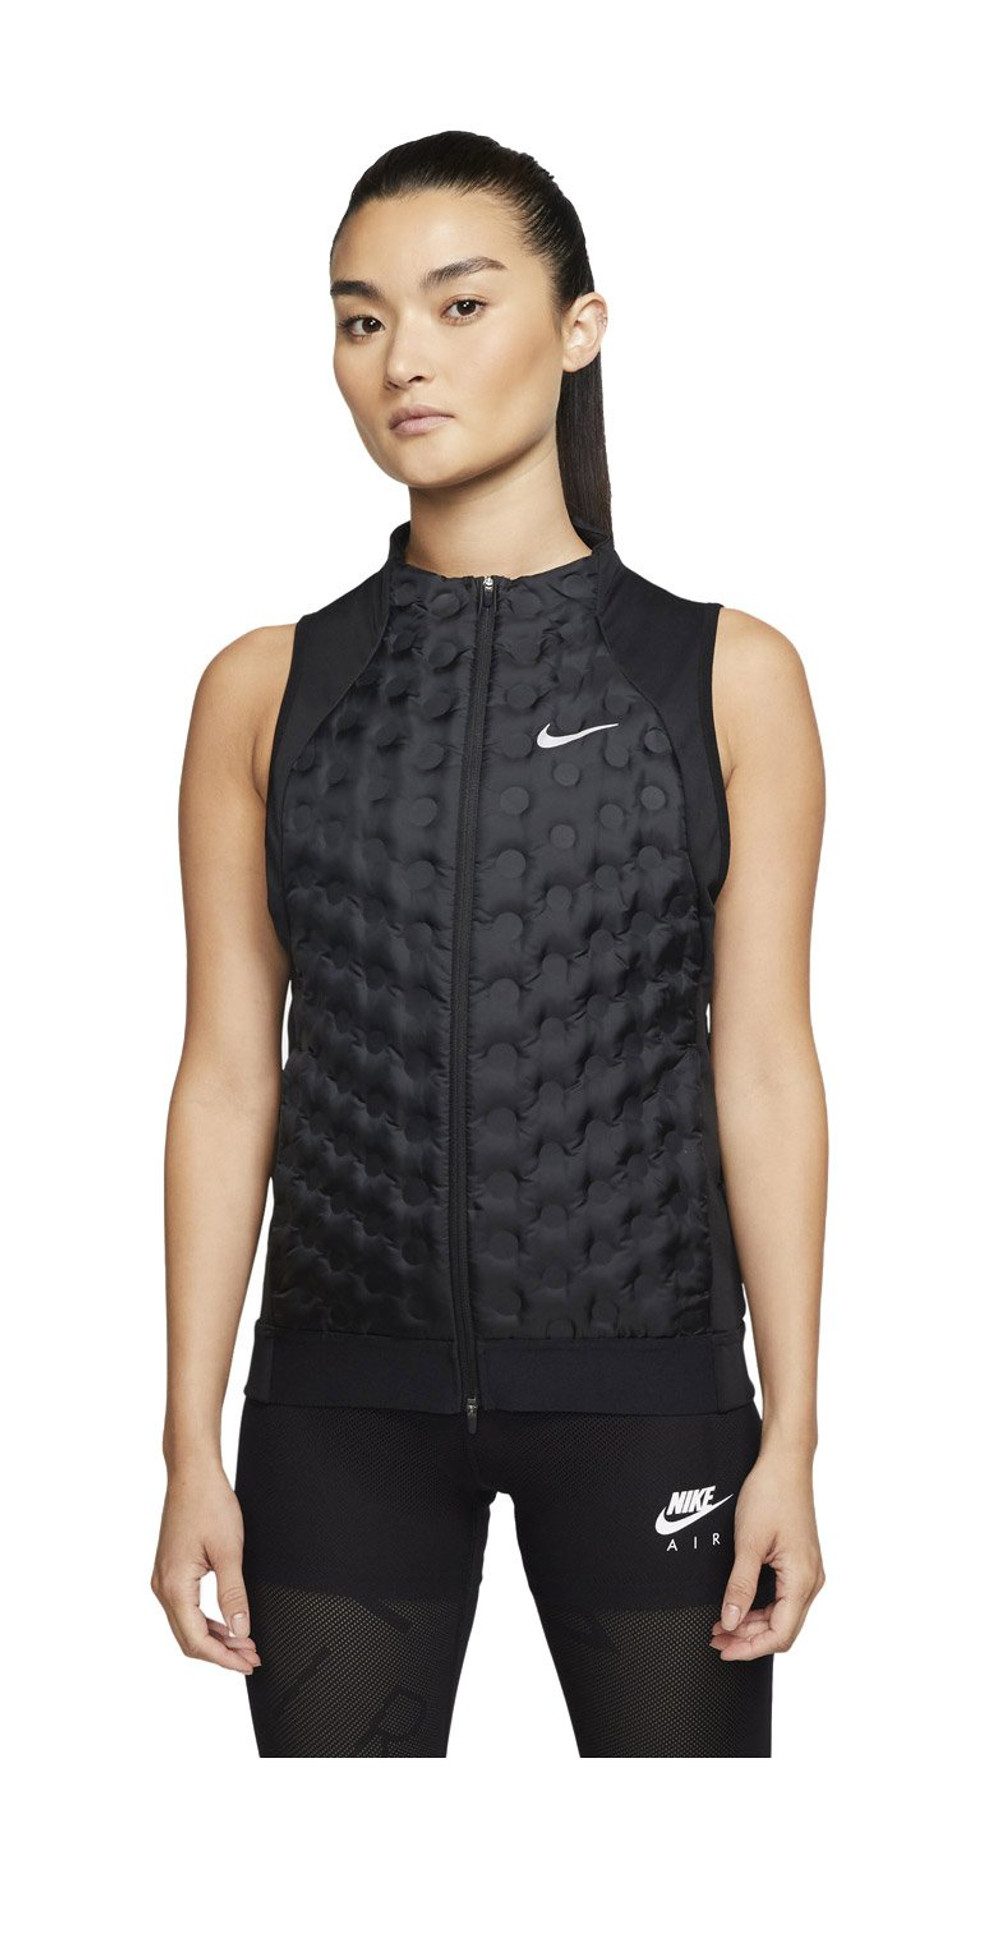 Nike Women's Aeroloft Vest - Footwear and Orthotics